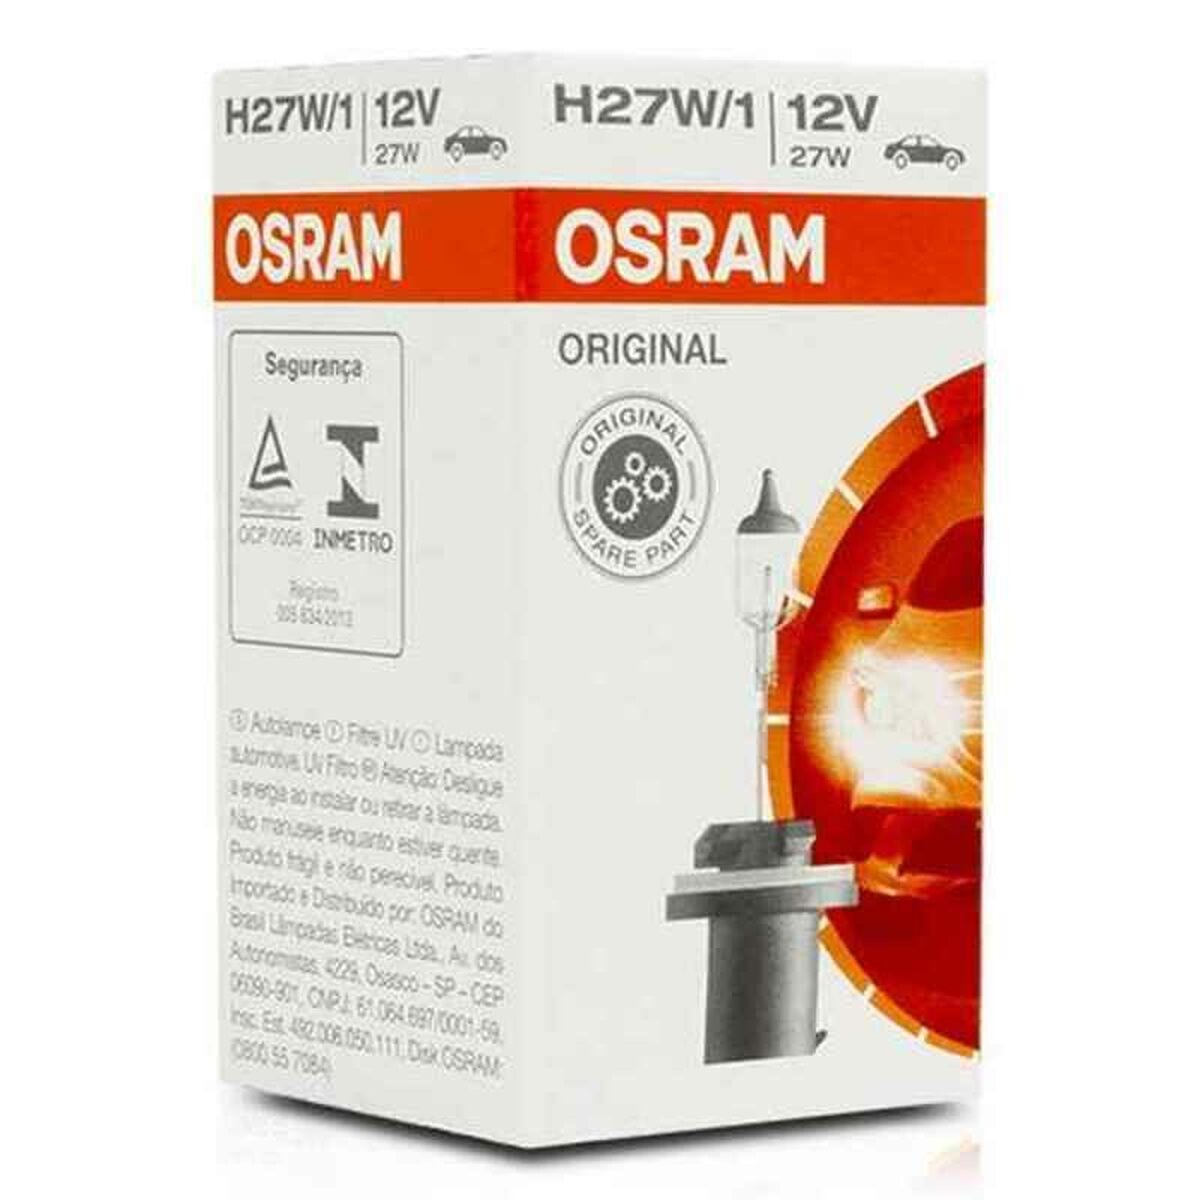 Ampoule pour voiture OS880 Osram OS880 H27W/1 27W 12V 3